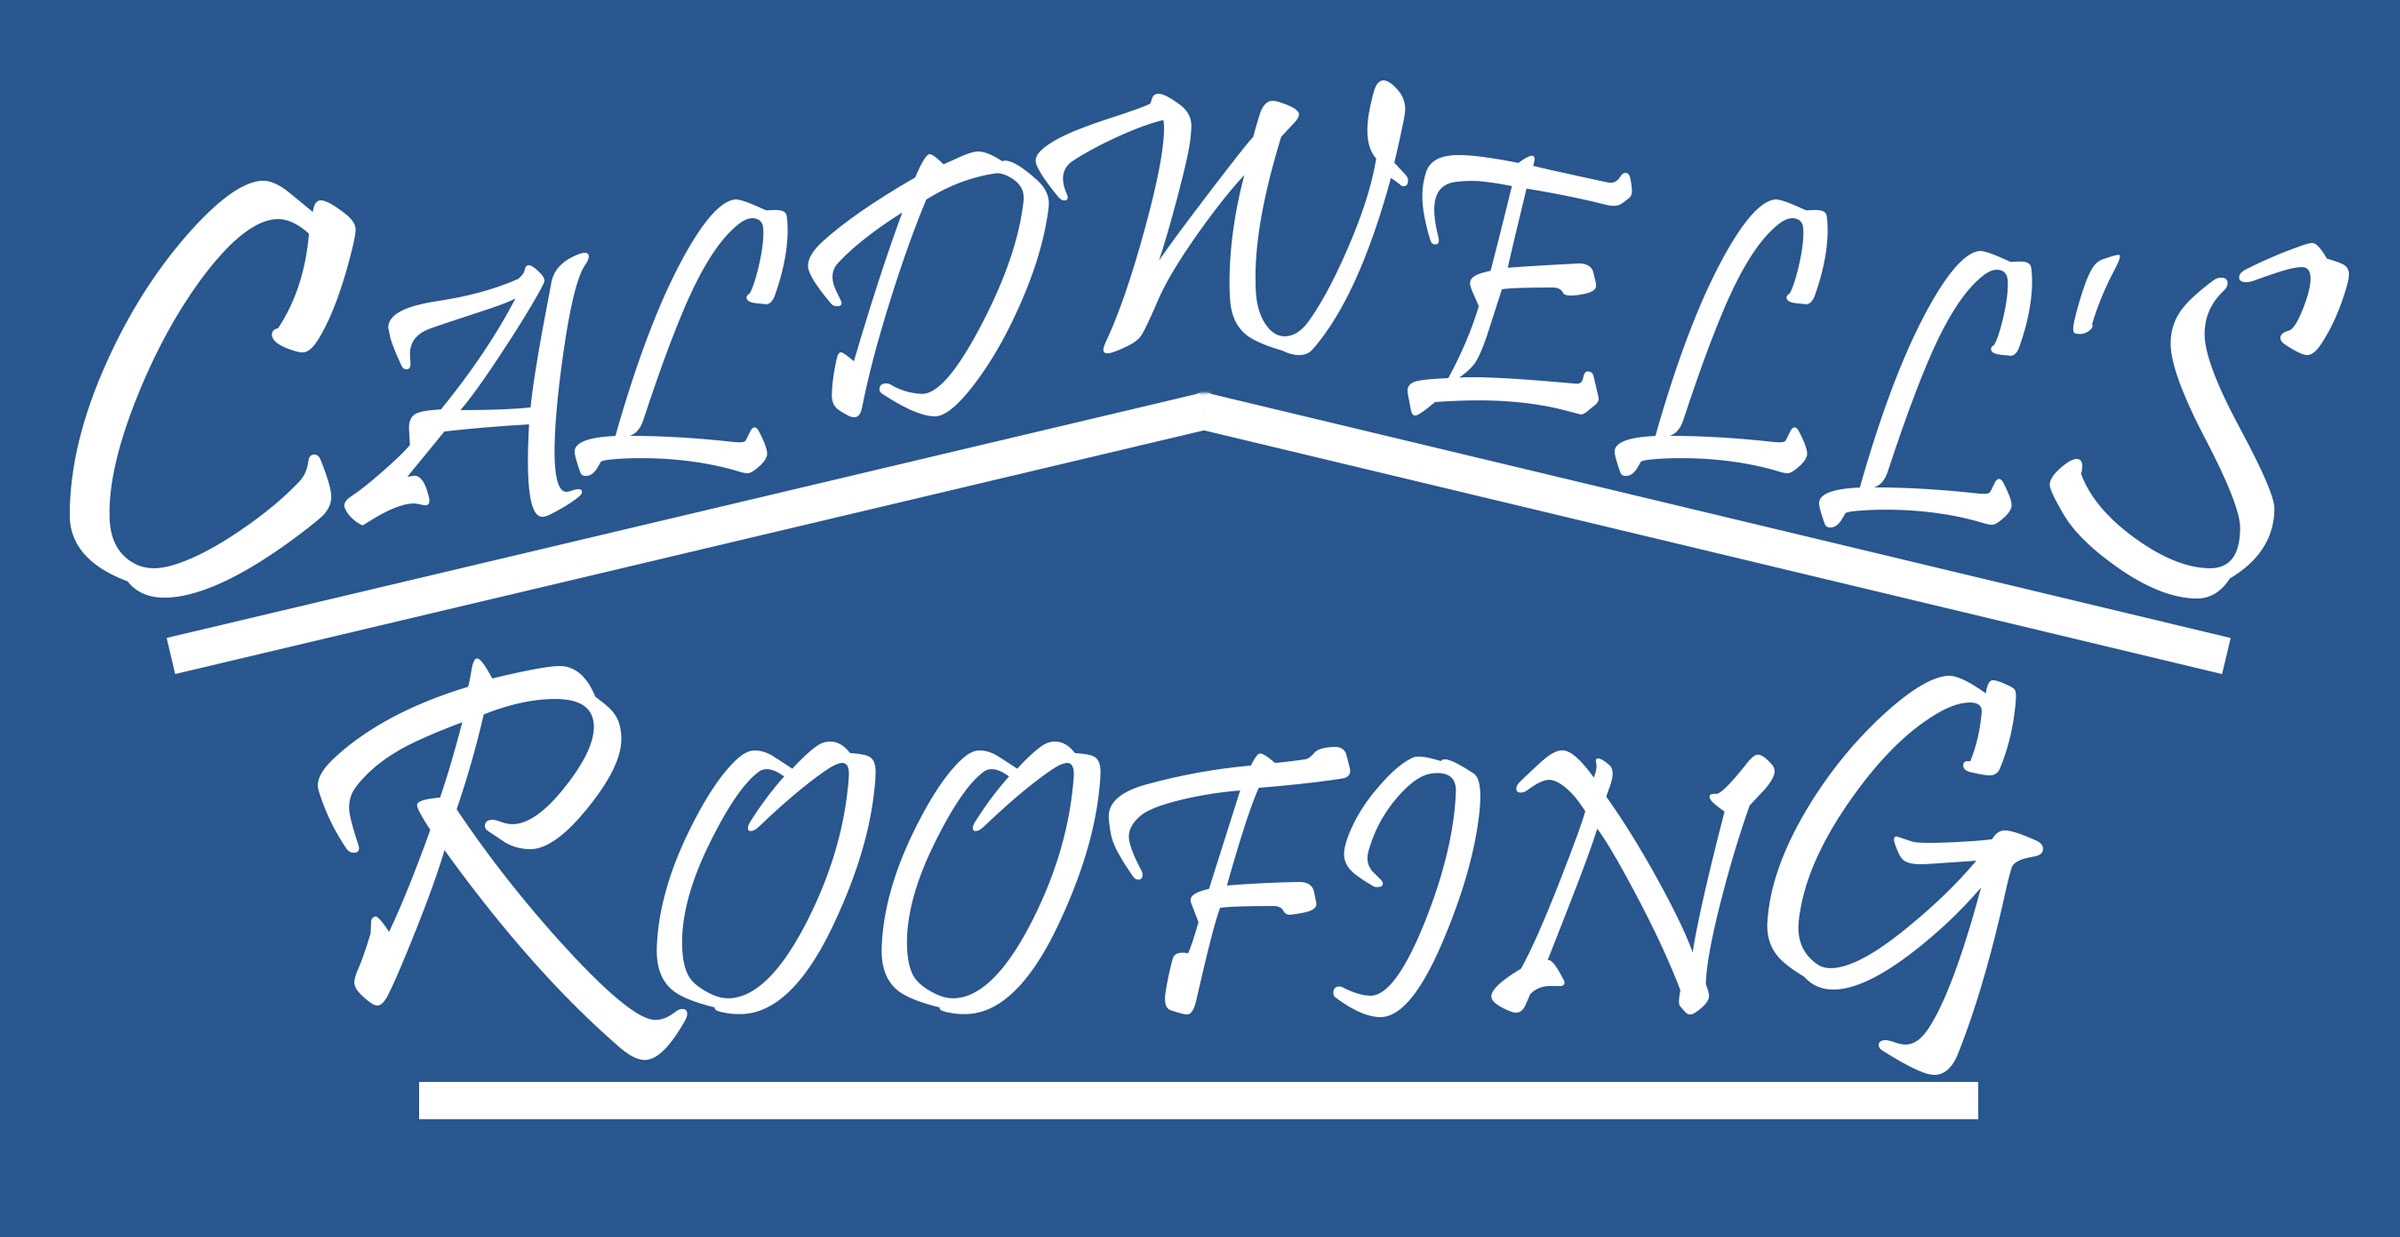 Caldwells Roofing